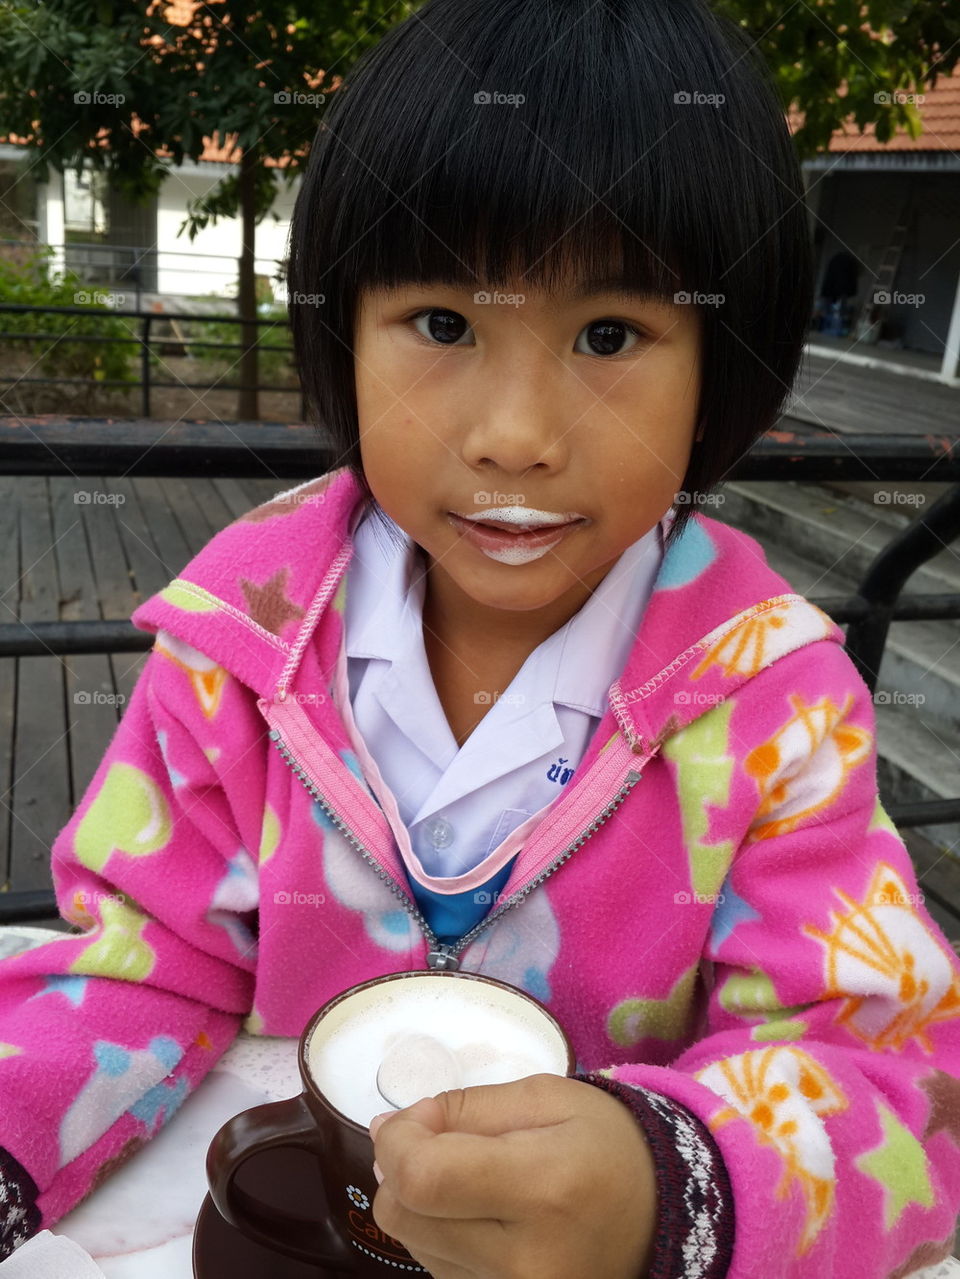 Cute Asian girl drinking creamy hot chocolate.